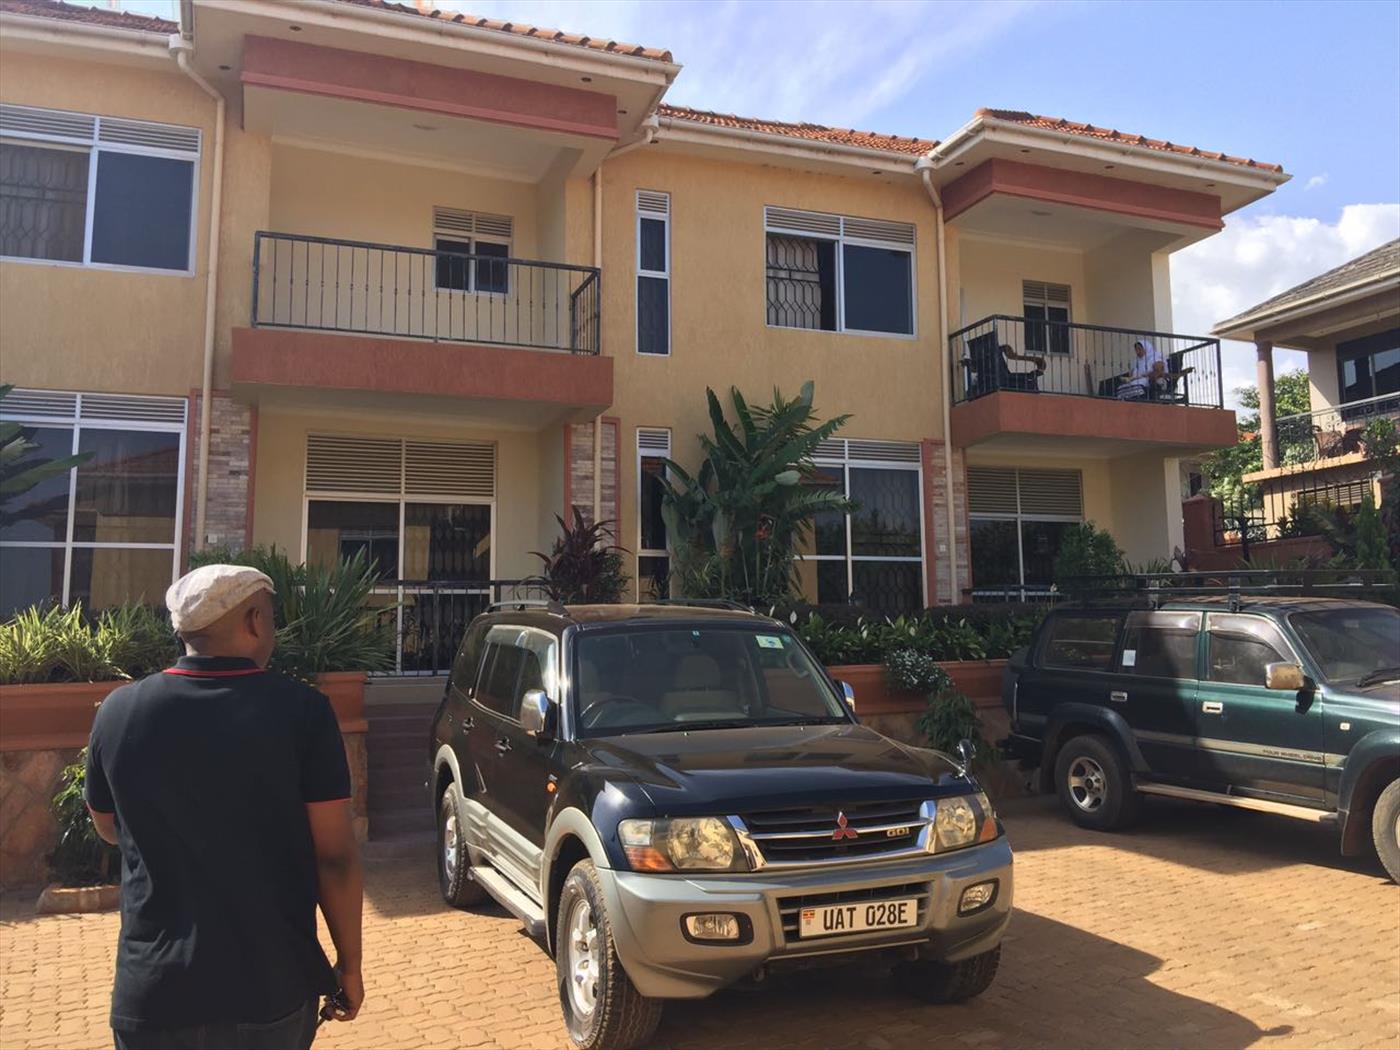 Town House for rent in Butabika Kampala